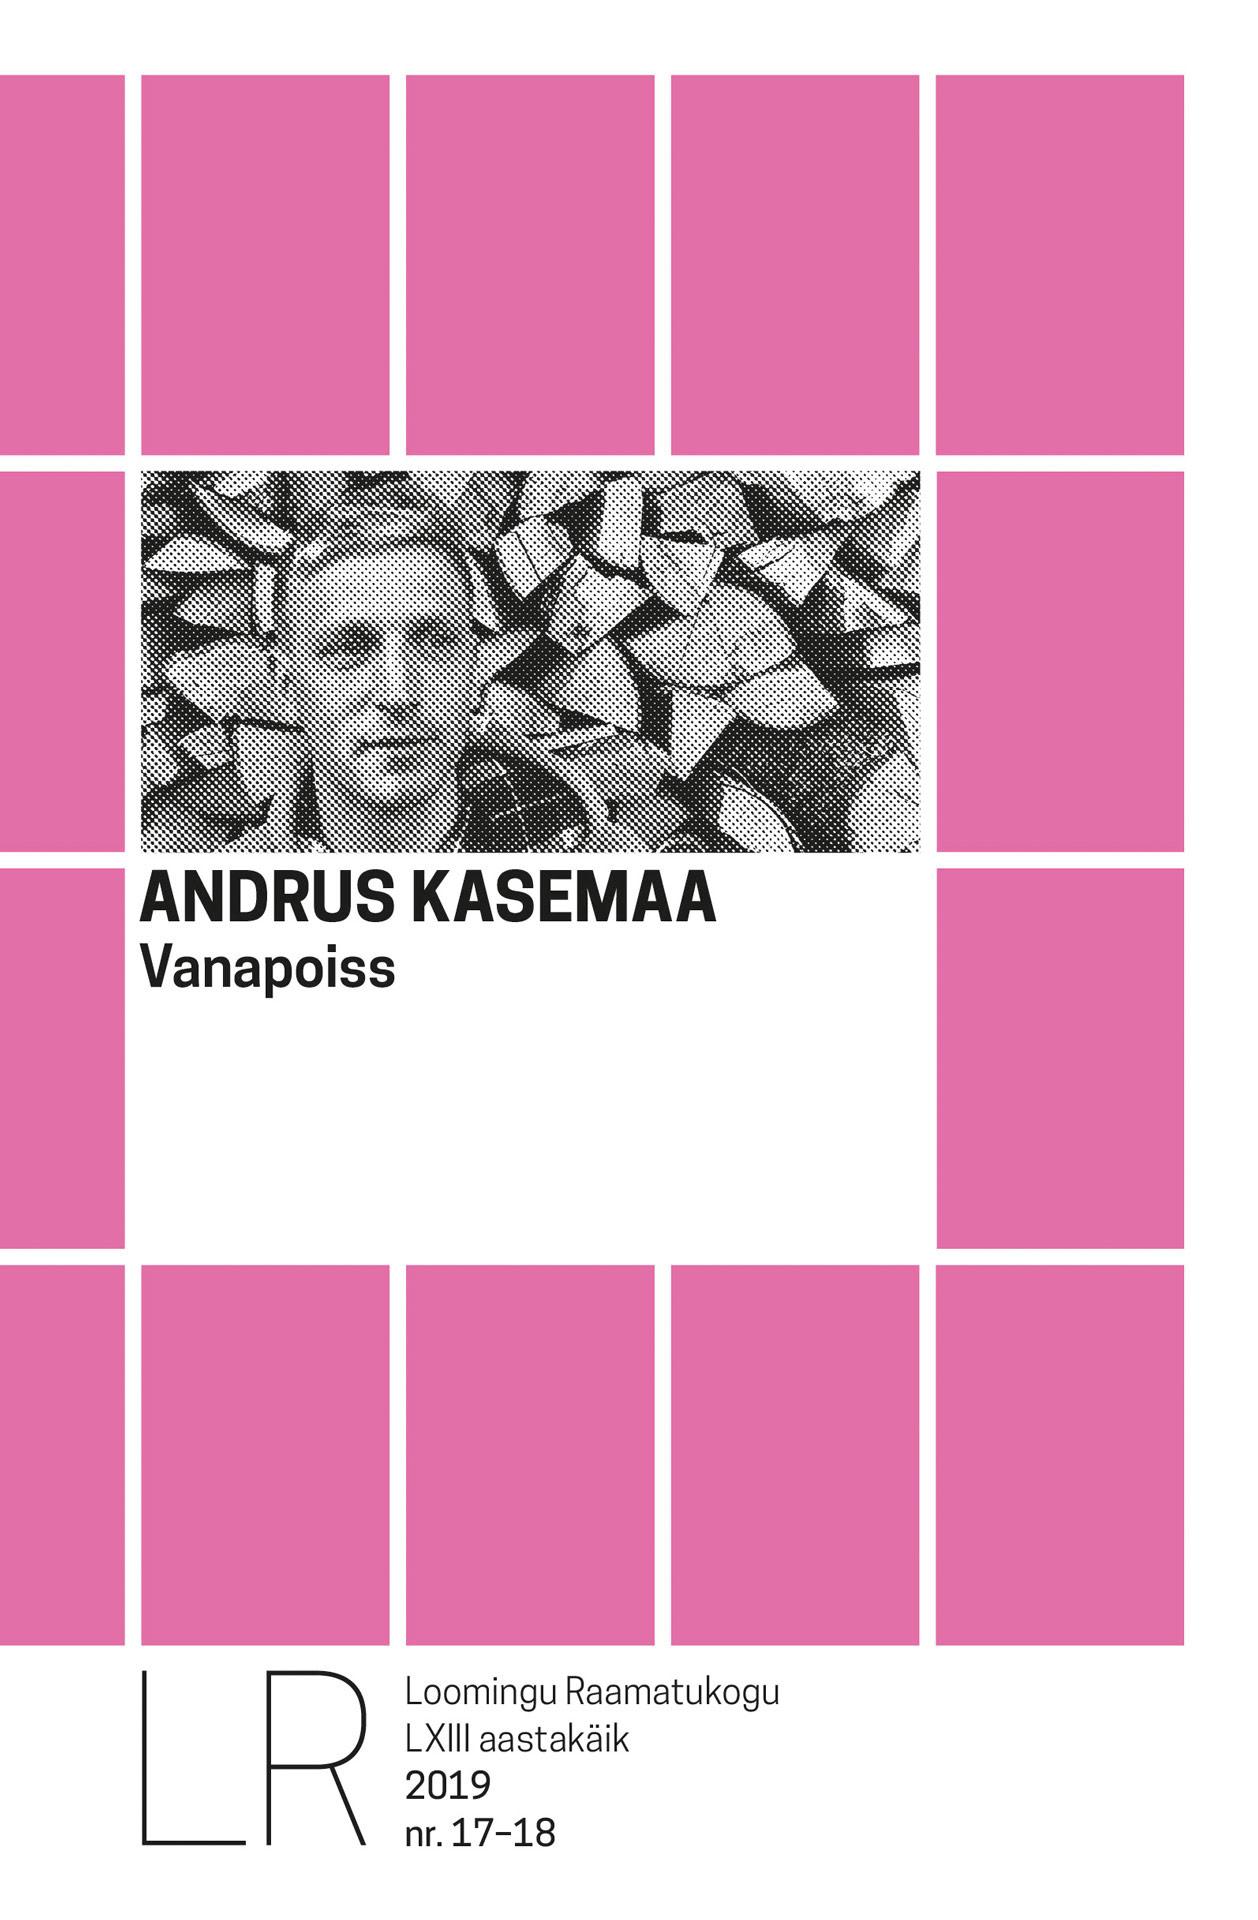 LRK 17-18/2019 ANDRUS KASEMAA. VANAPOISS